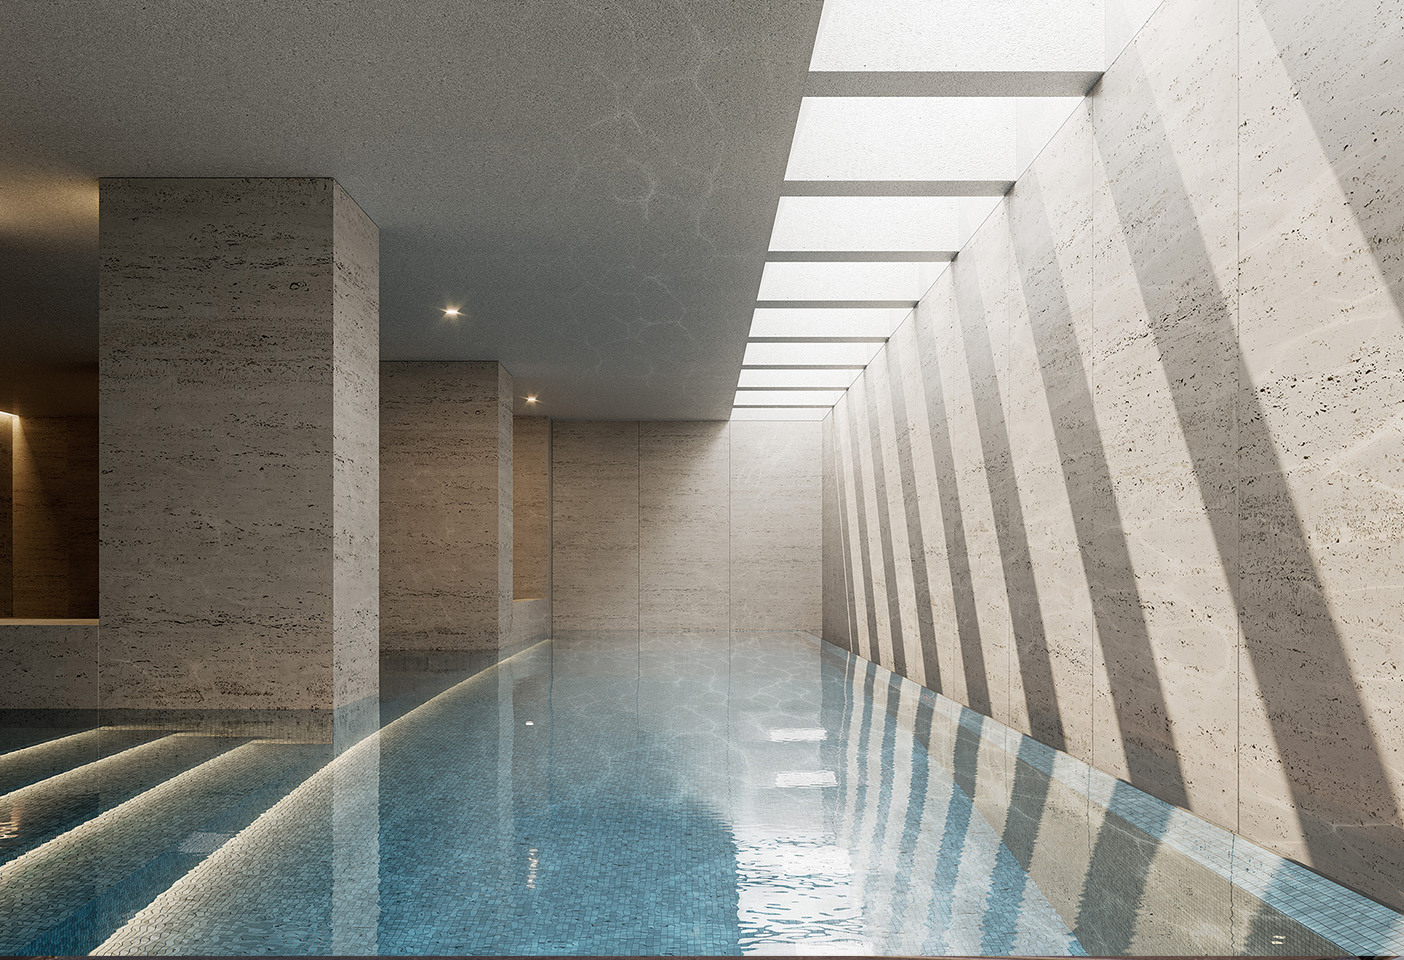 Aura's beautiful 'Zumthor-esque' pool that draws light into the building. CGI c/o 'AURA by Aqualand'.